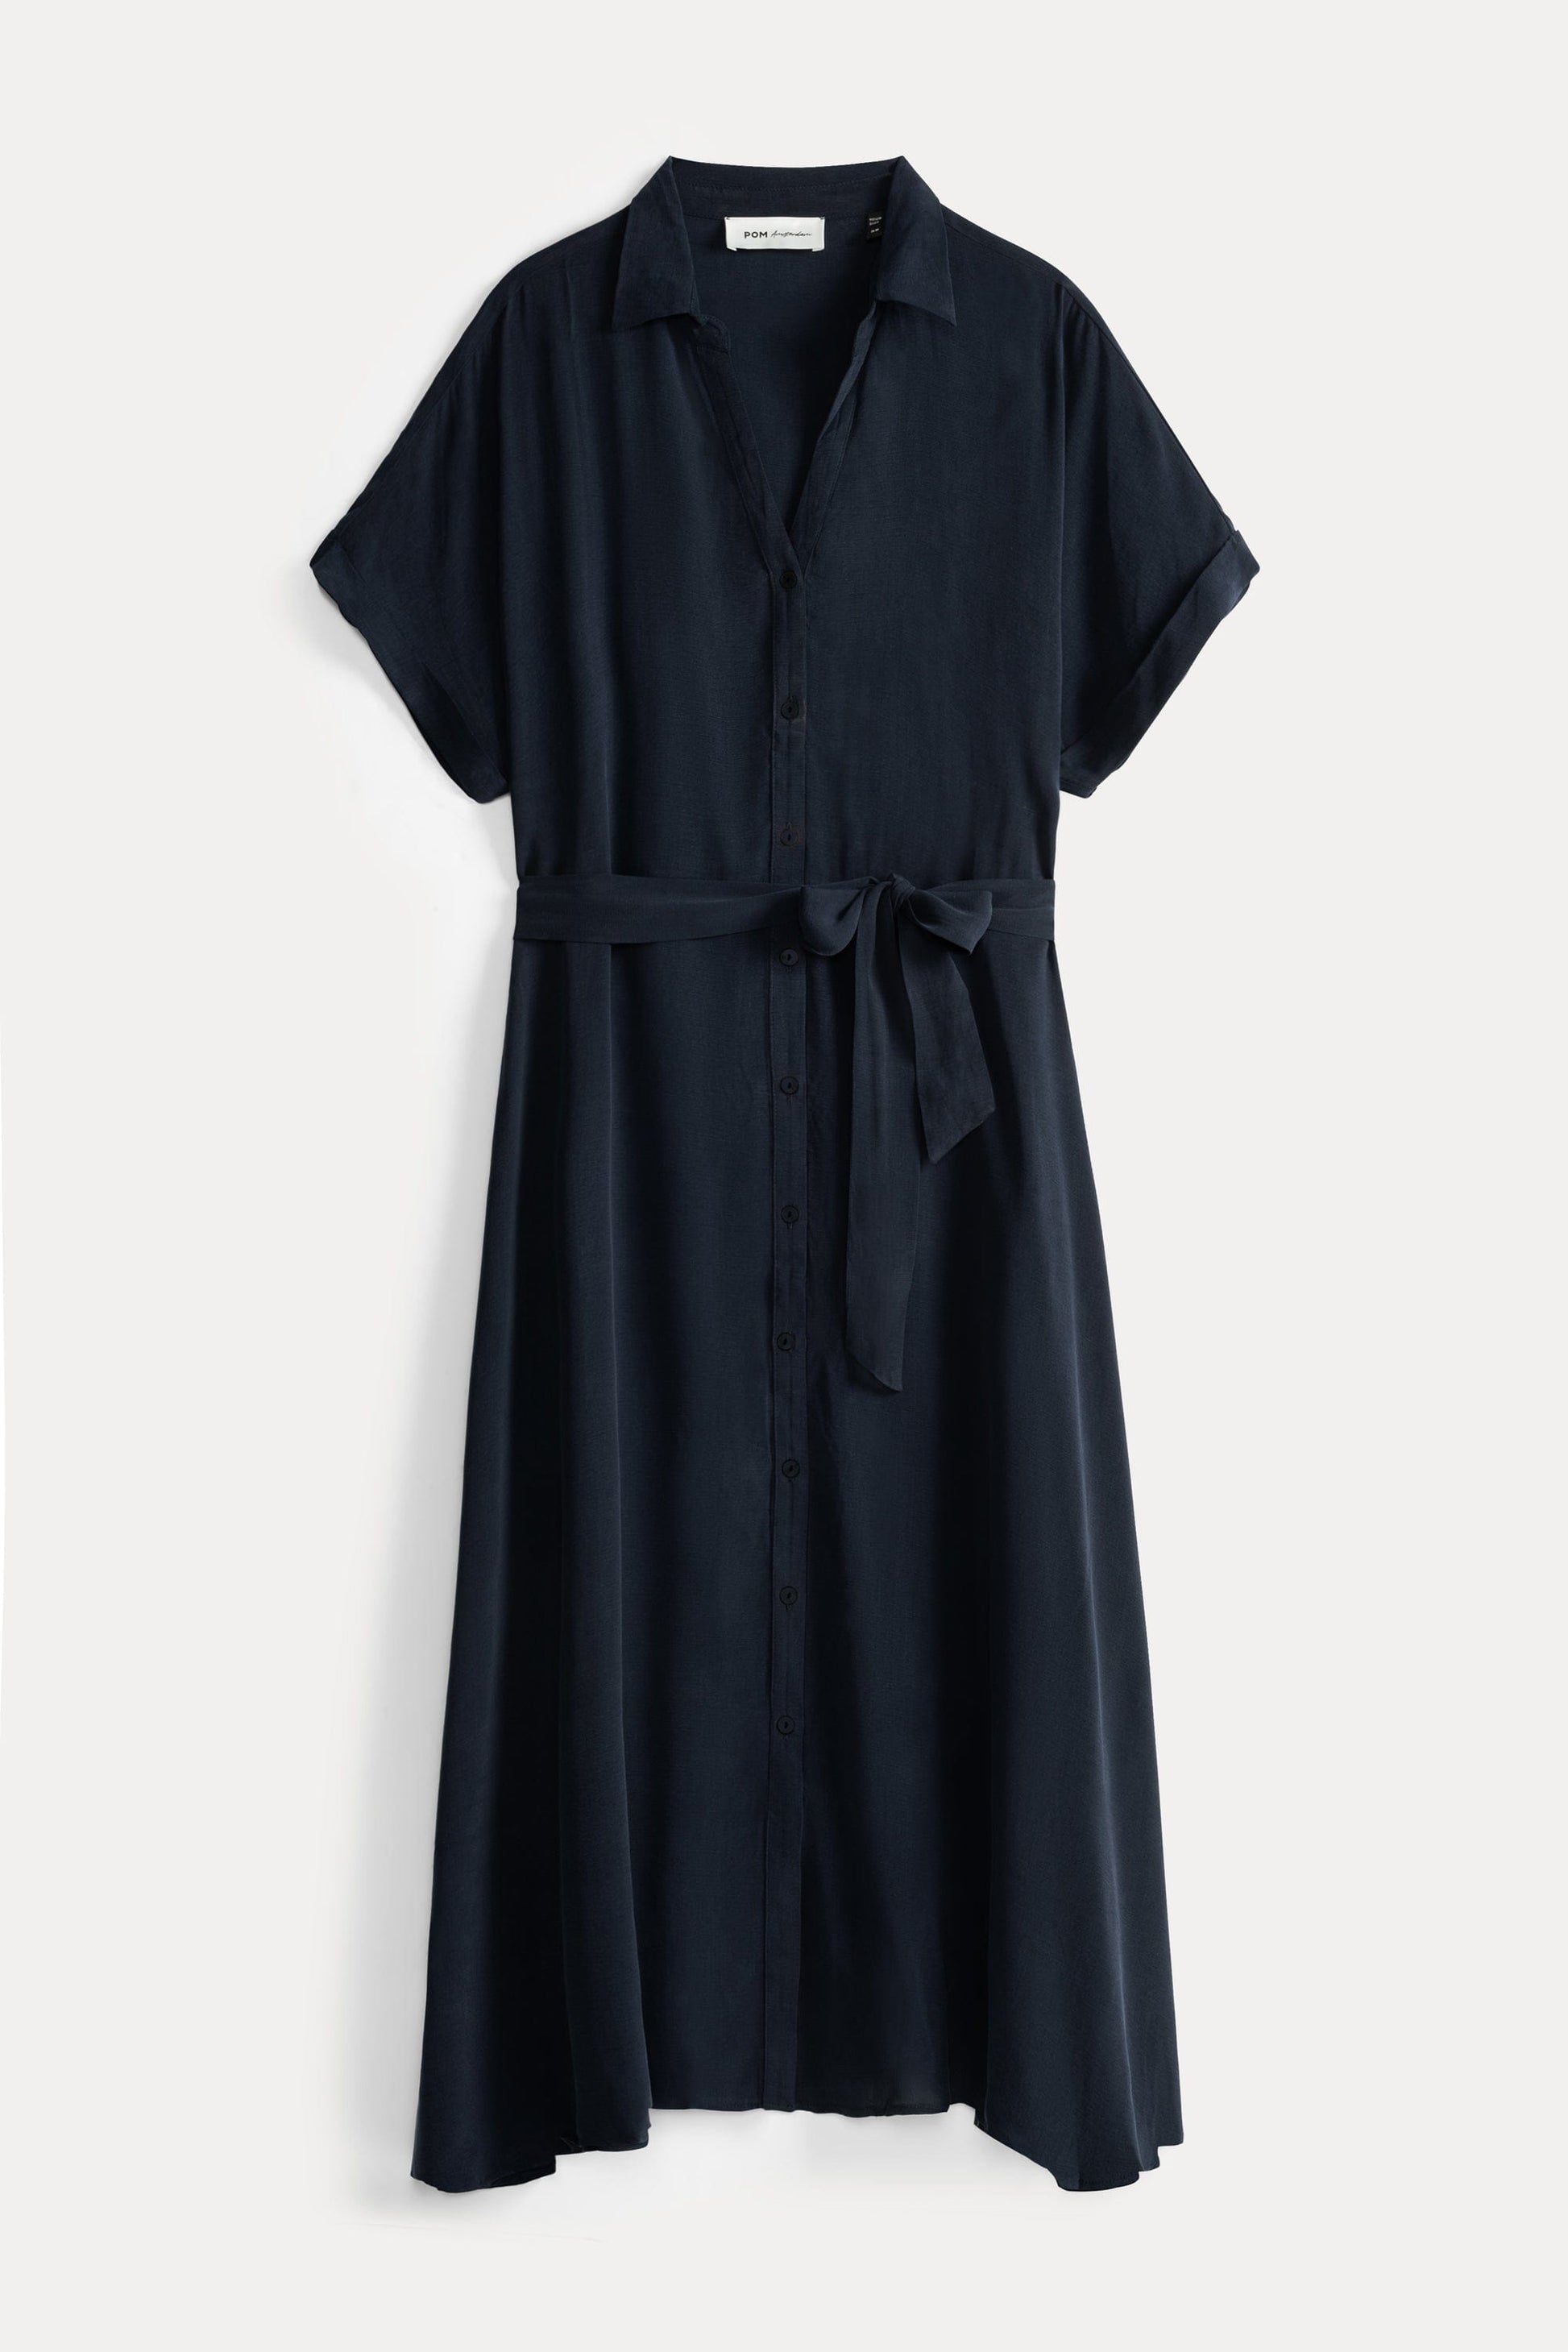 POM Amsterdam Dresses DRESS - Lynn Dark Navy